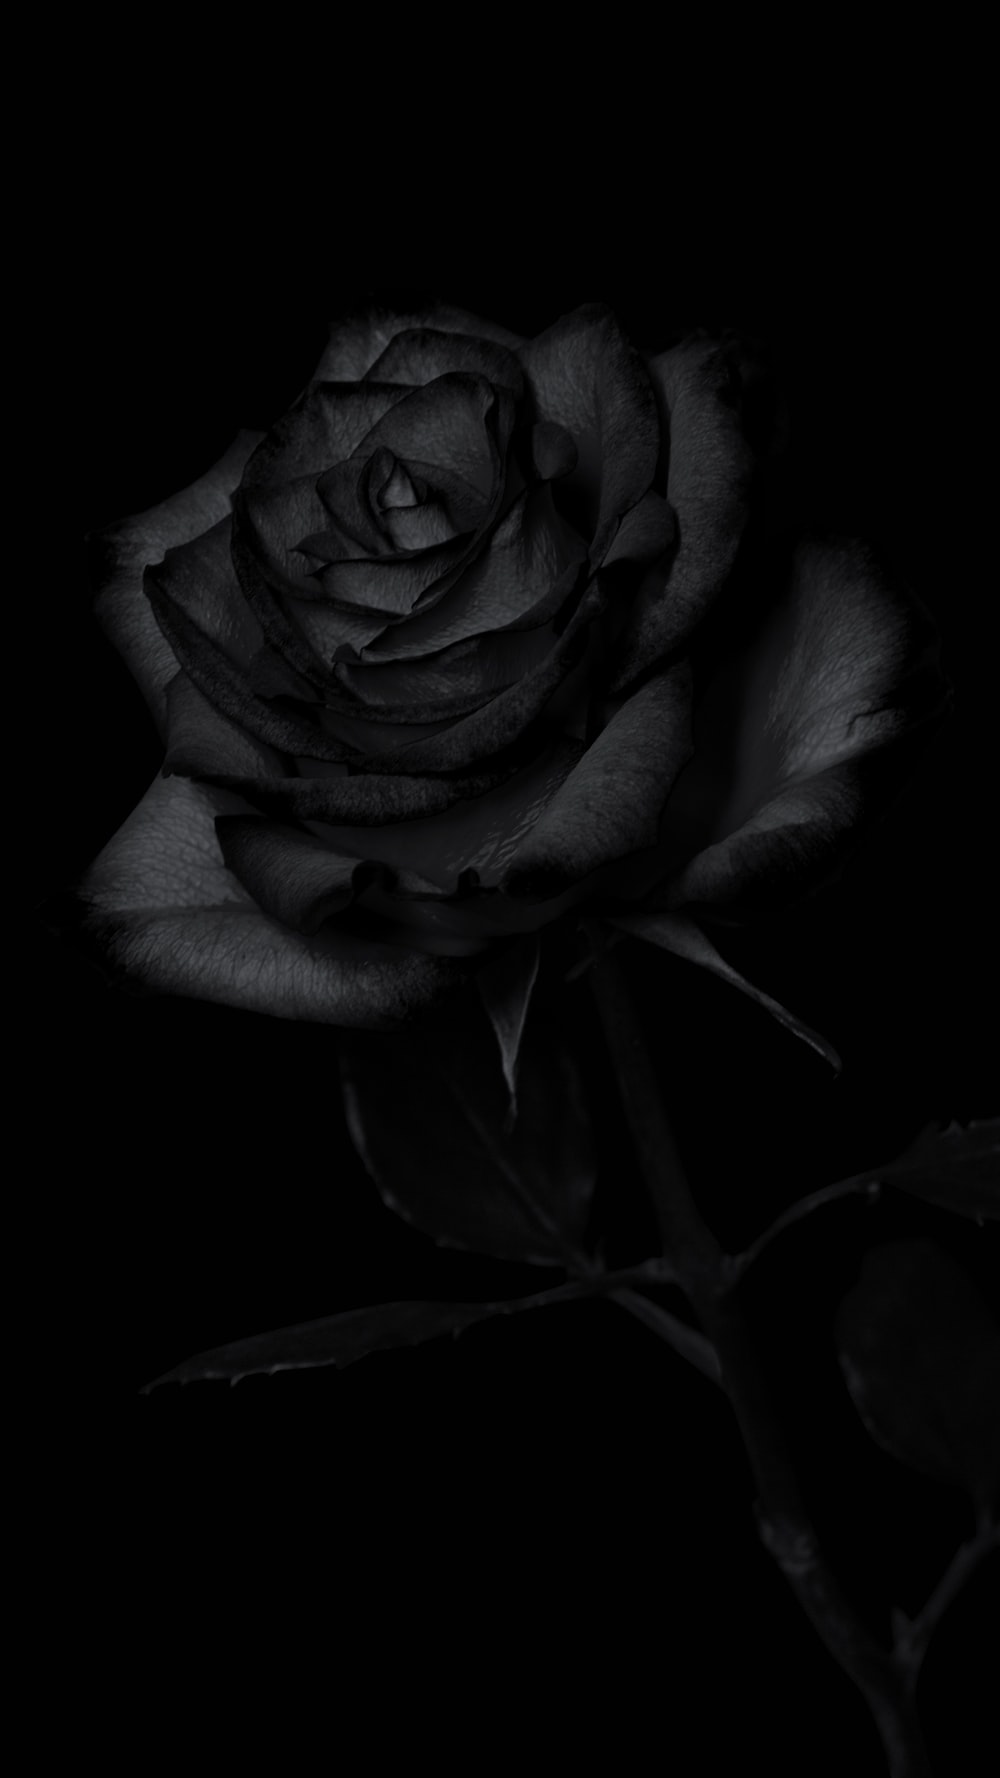 Dark Rose Picture. Download Free Image